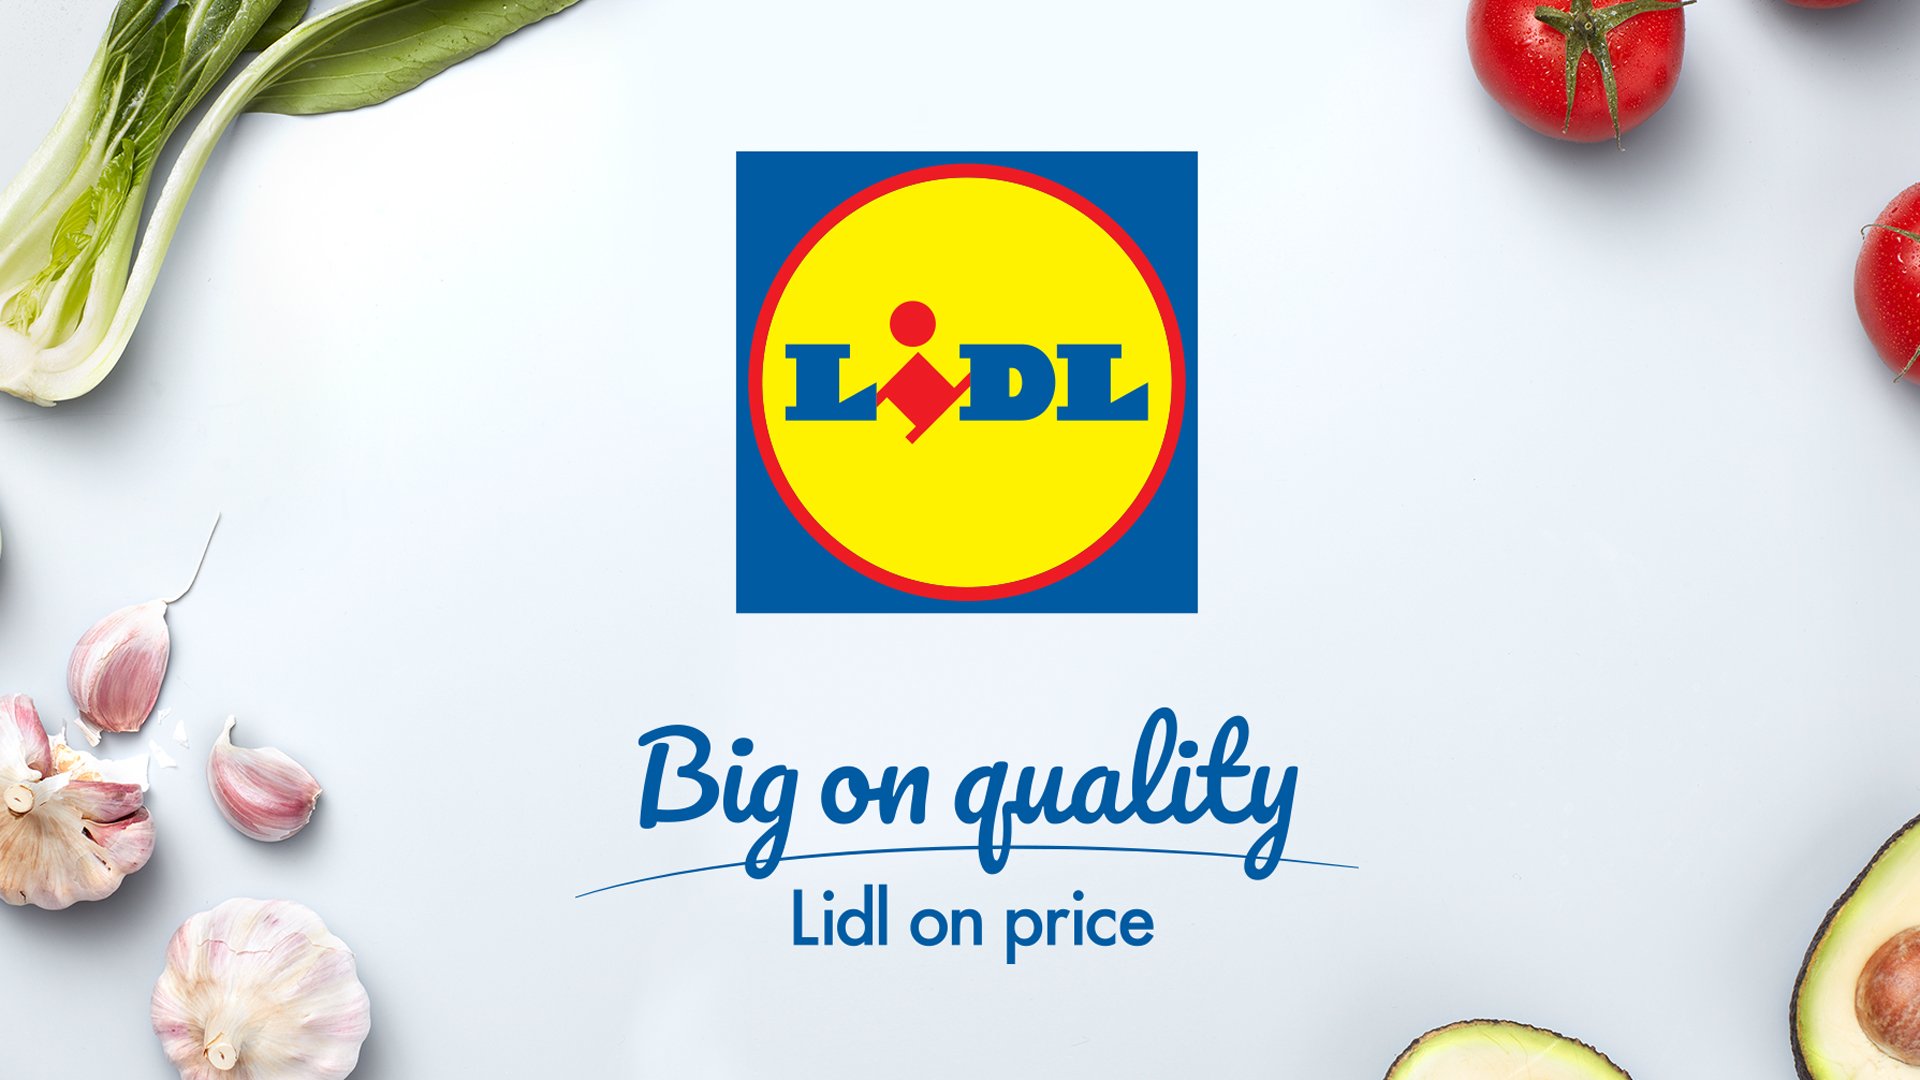 LIDL - Big On Quality, Lidl On Price